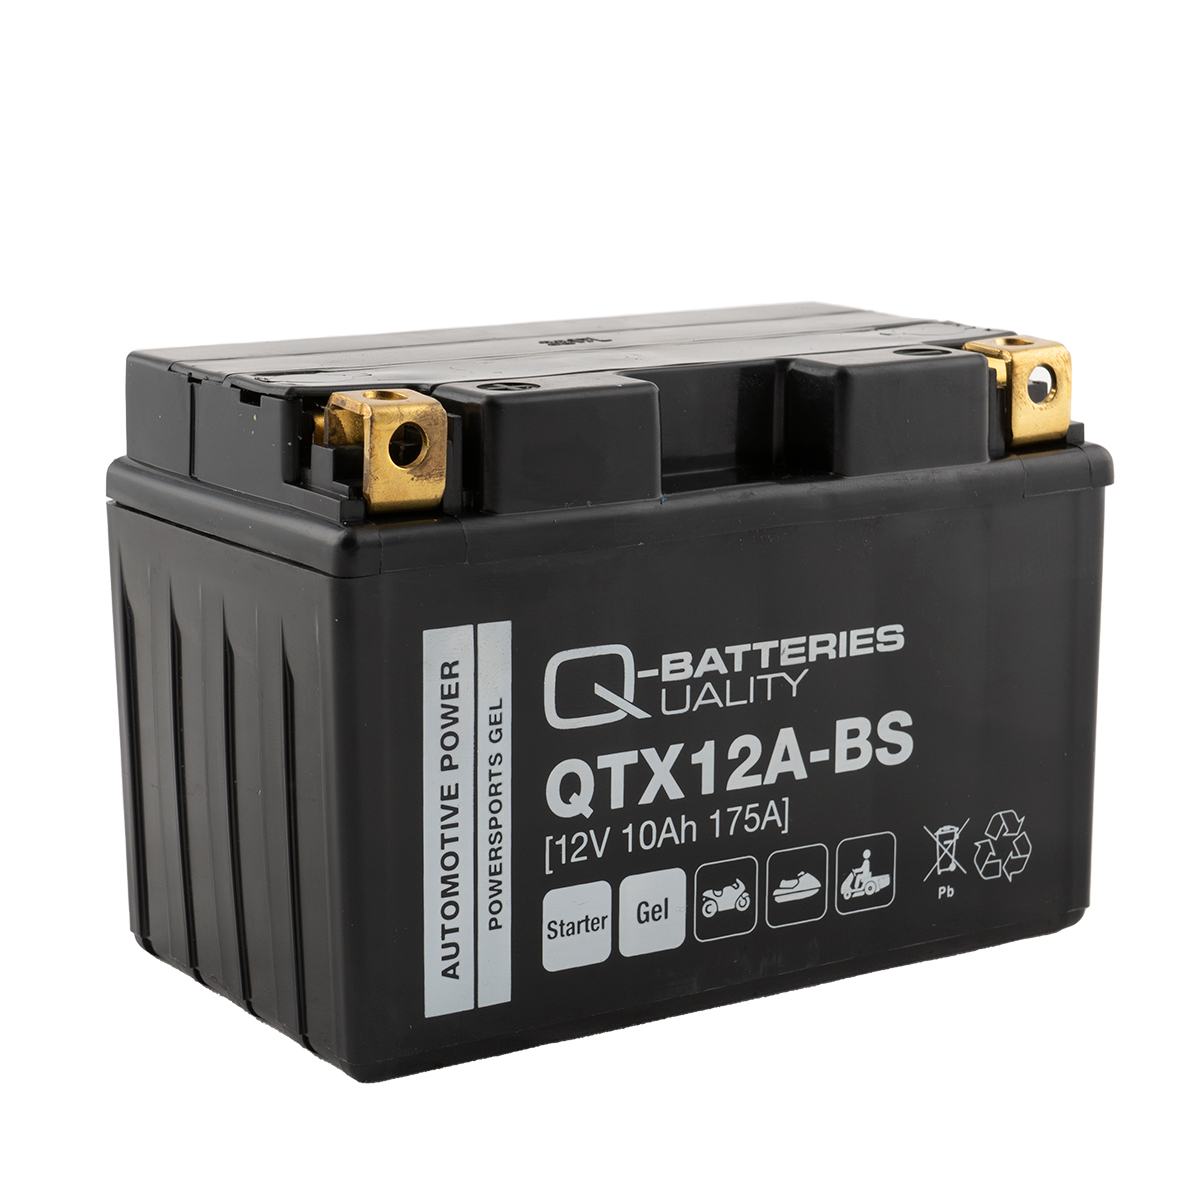 Q-Batteries QTX12A-BS Gel Motorradbatterie 12V 10Ah 175A